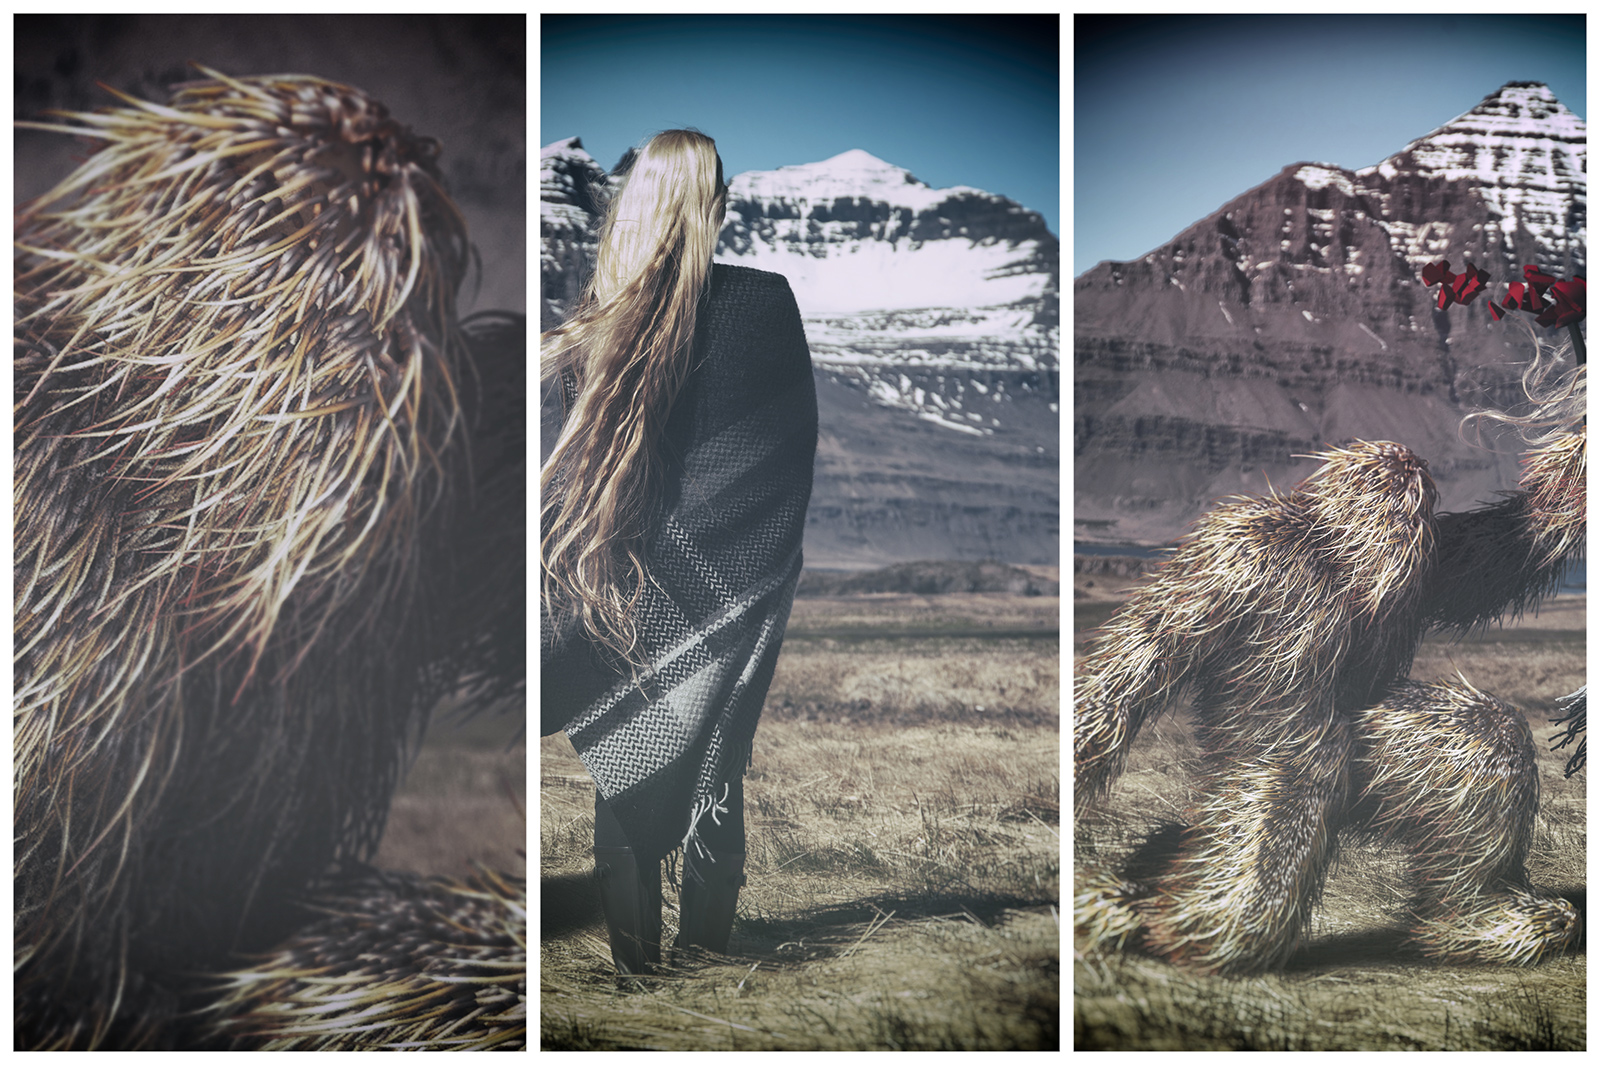 Búlandstindur Mountain, Pyramid Mountain, Iceland, Iceland Bigfoot, Lost in Iceland, Cinema 4D, C4D, 3D Render, CGI, Scifi, Iceland, landscape, Nikon D700, 52 Renders